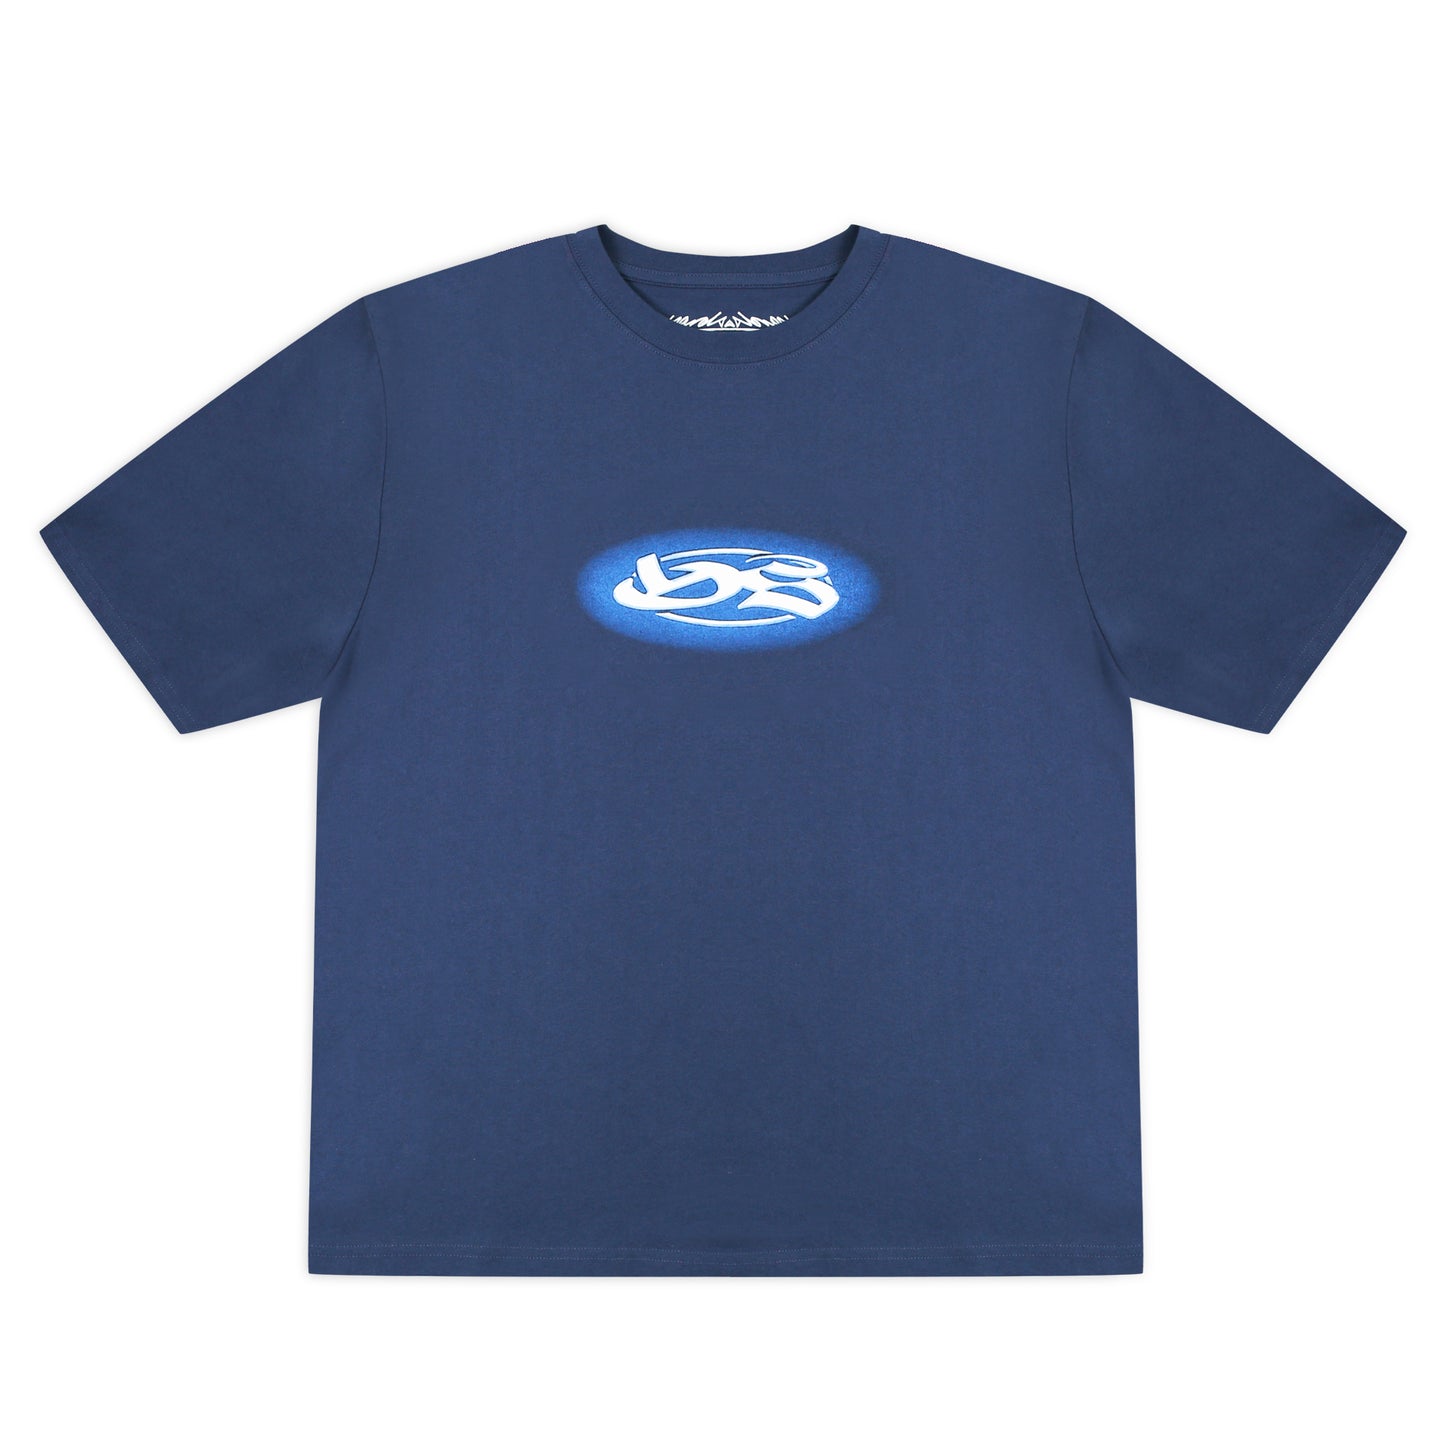 YS Fade T-Shirt (Blue)